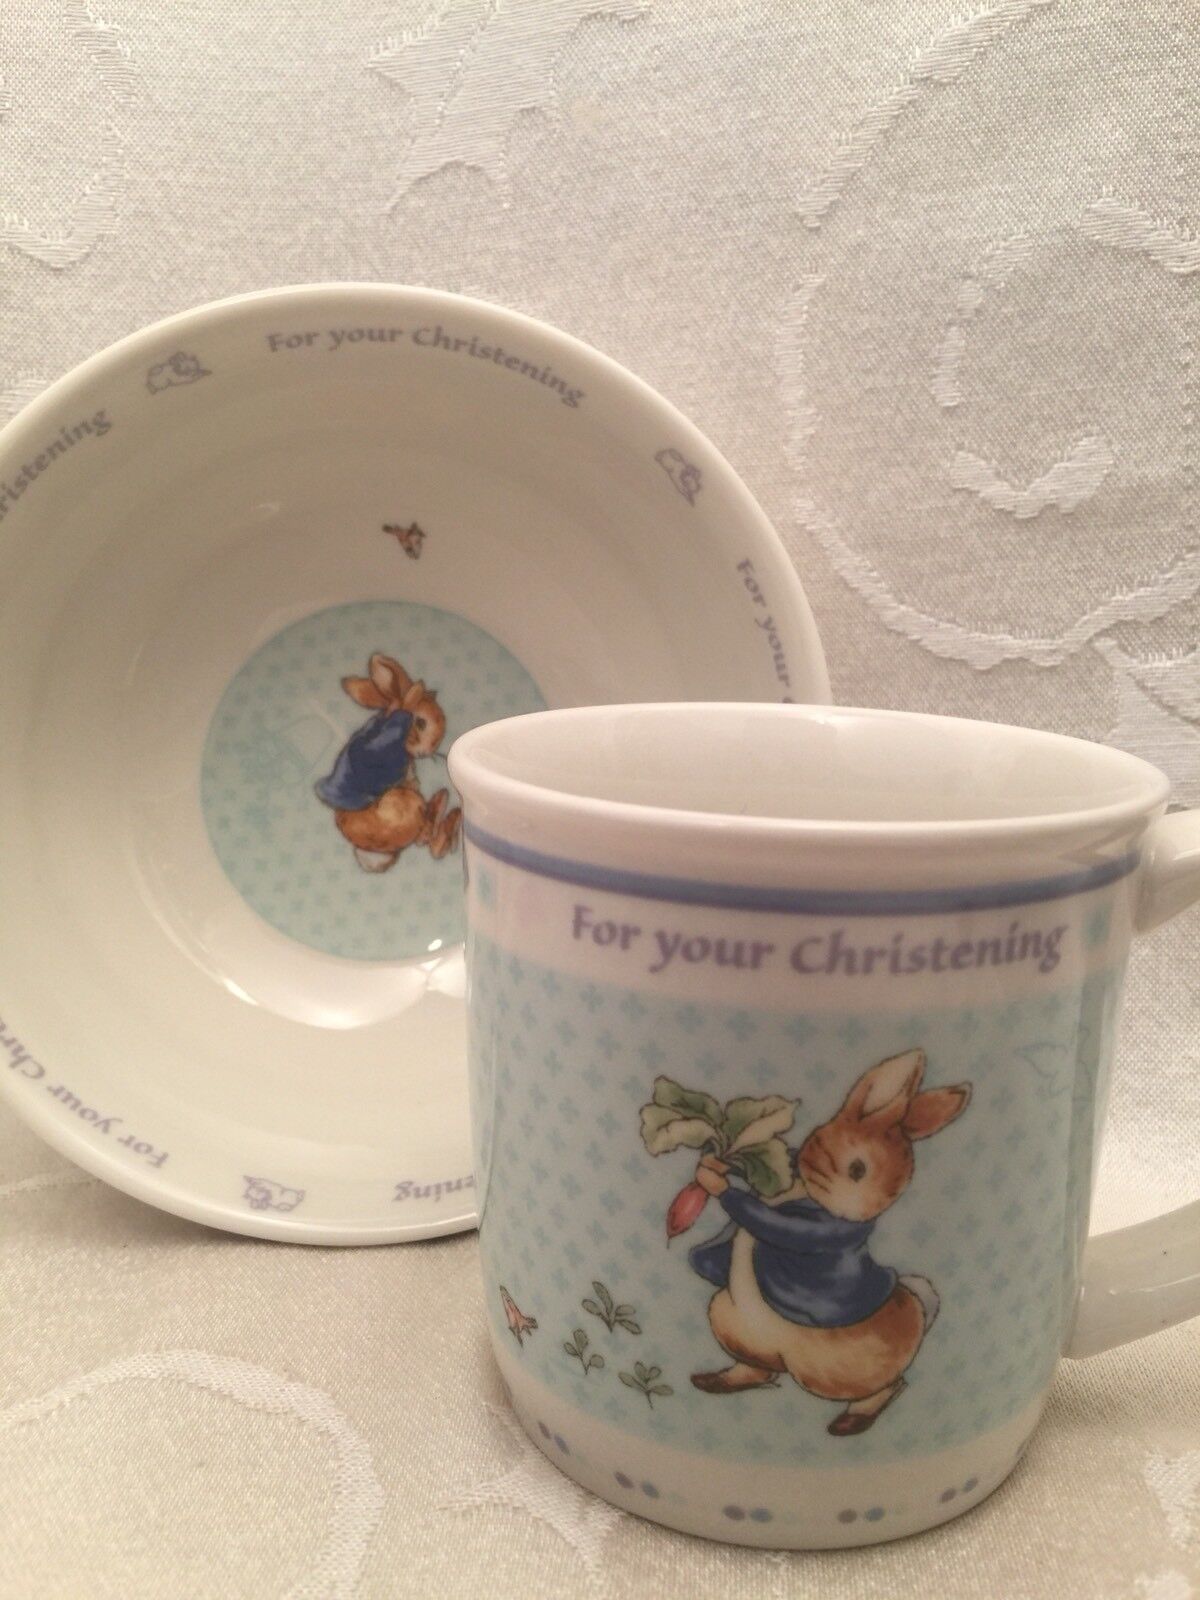 Peter Rabbit Christening Set Wedgwood Bowl Cup Mug Beatrix Potter Baby Gift